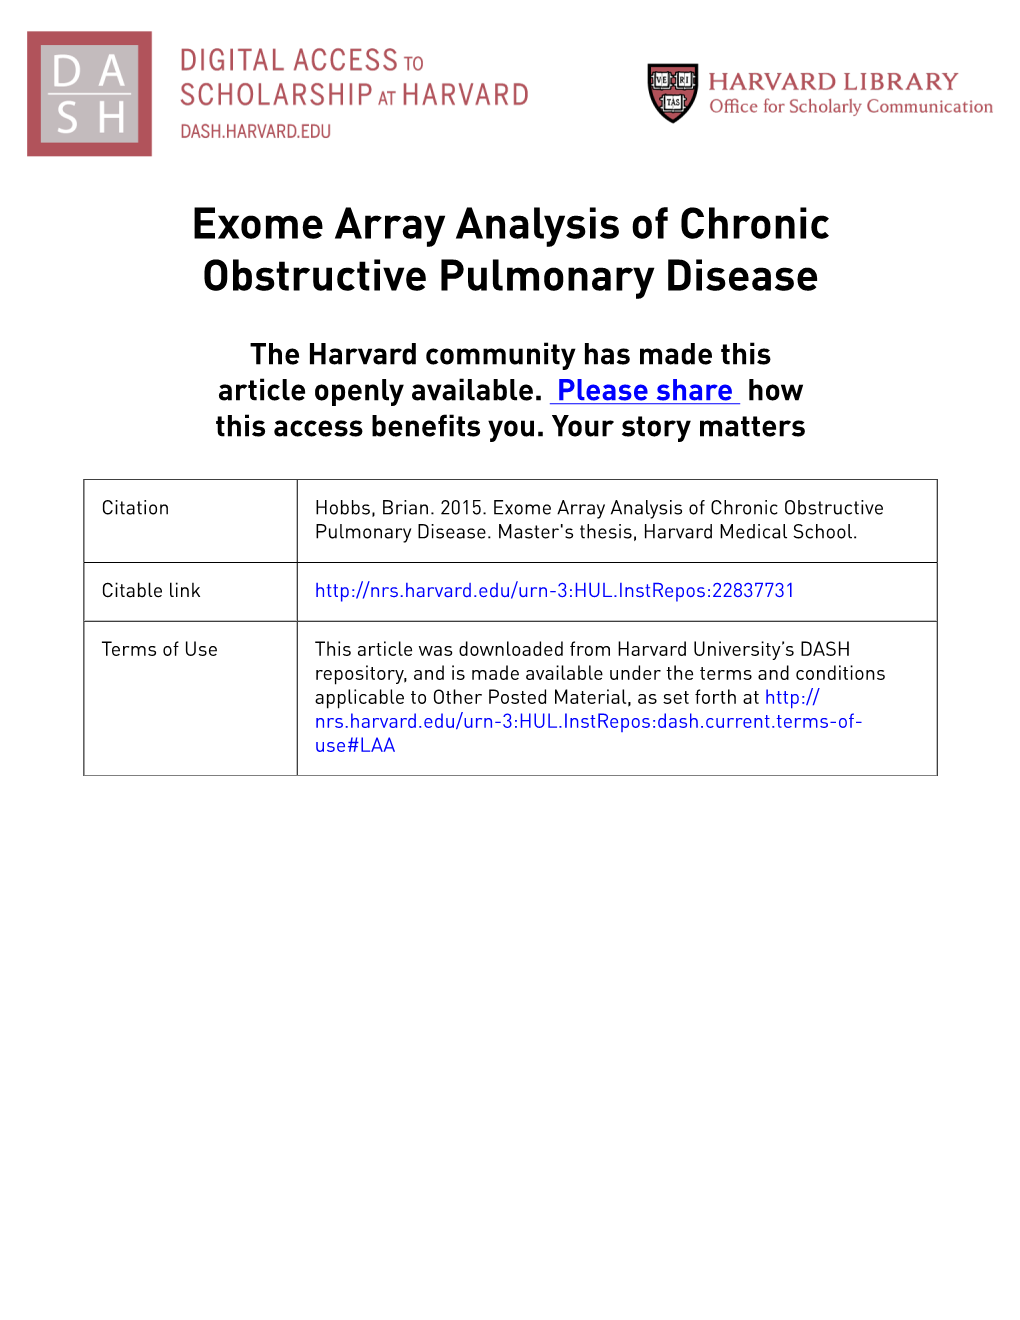 Exome Array Analysis of Chronic Obstructive Pulmonary Disease